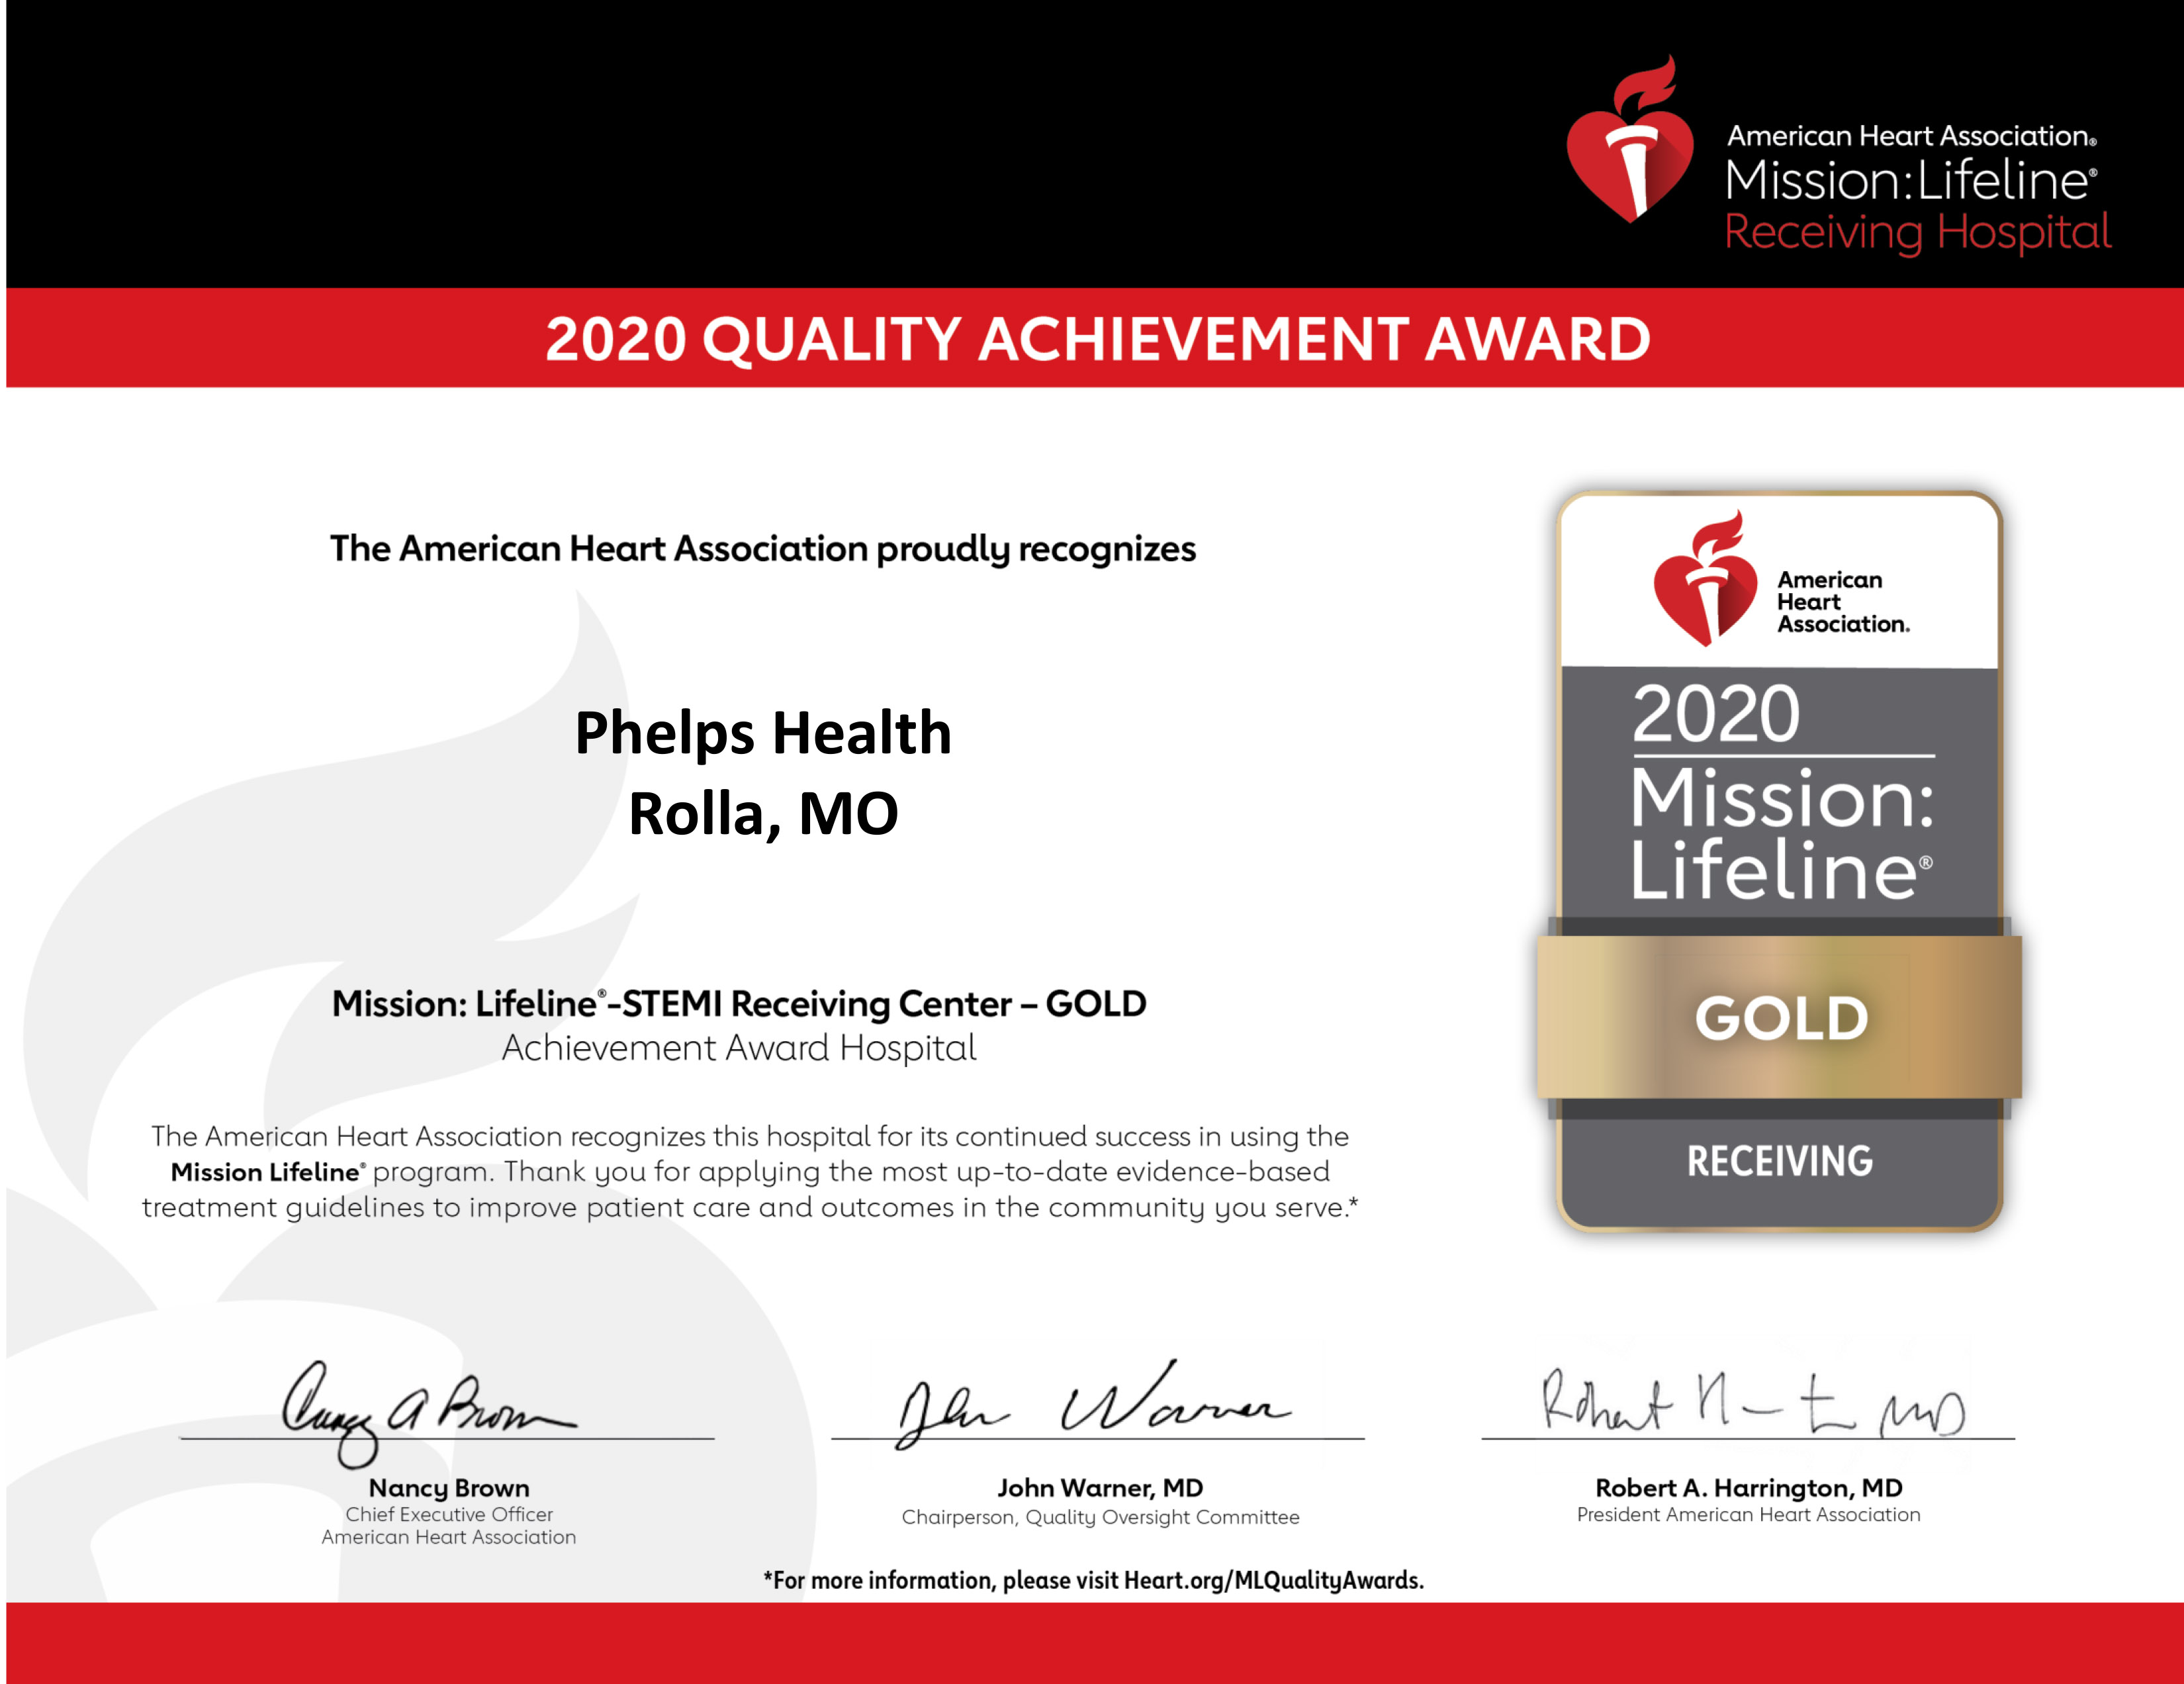 Mission: Lifeline Gold Receiving Award